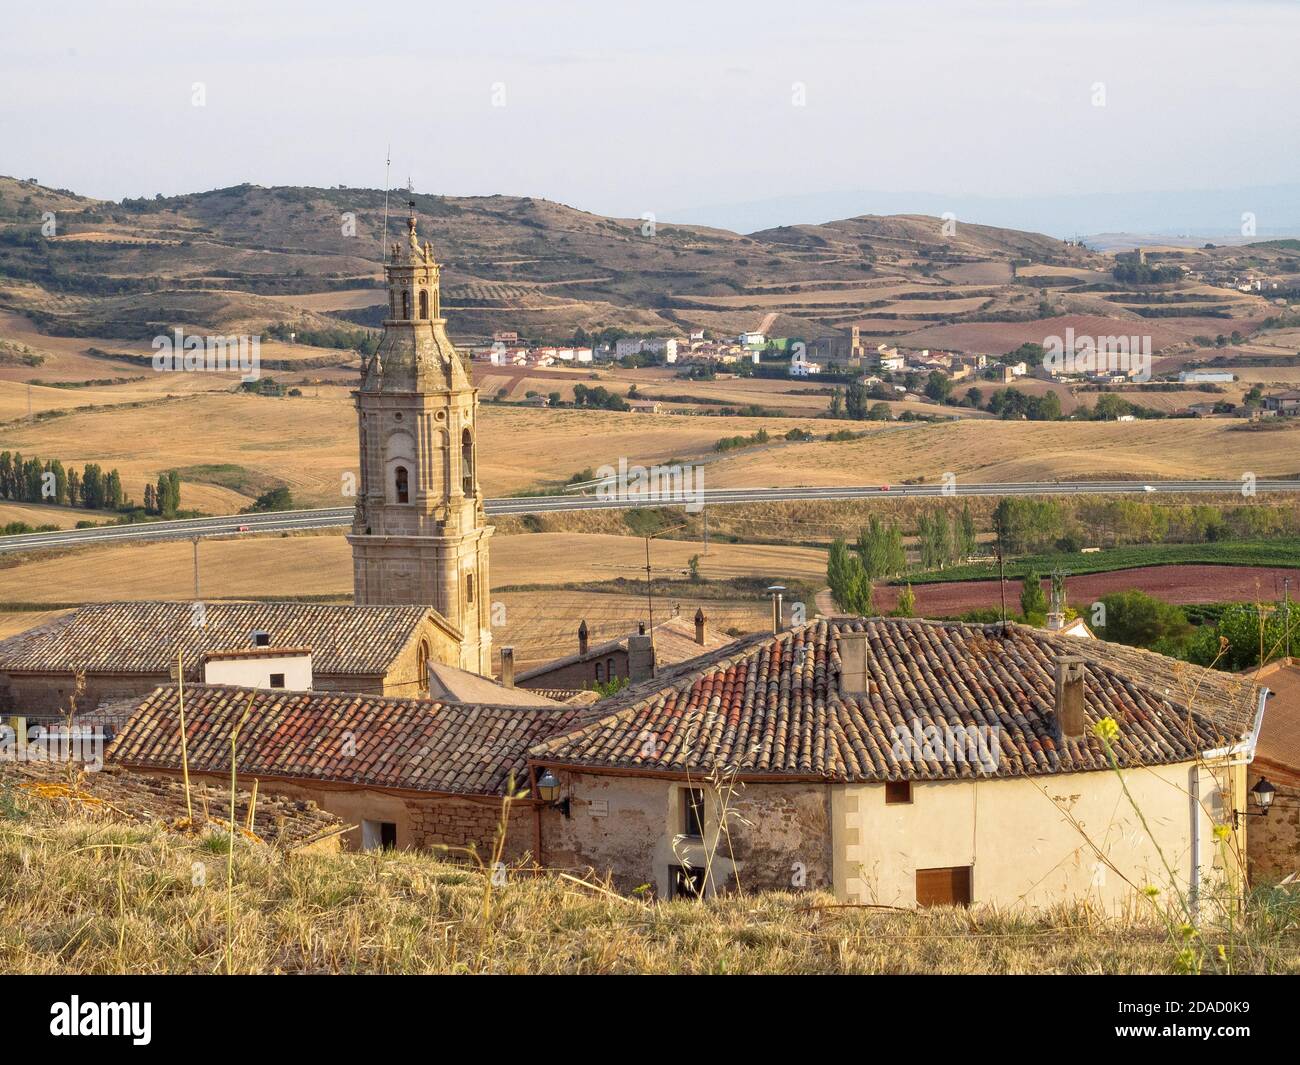 View of the surrounding area from above the village - Villamayor de Monjardin, Navarre, Spain Stock Photo